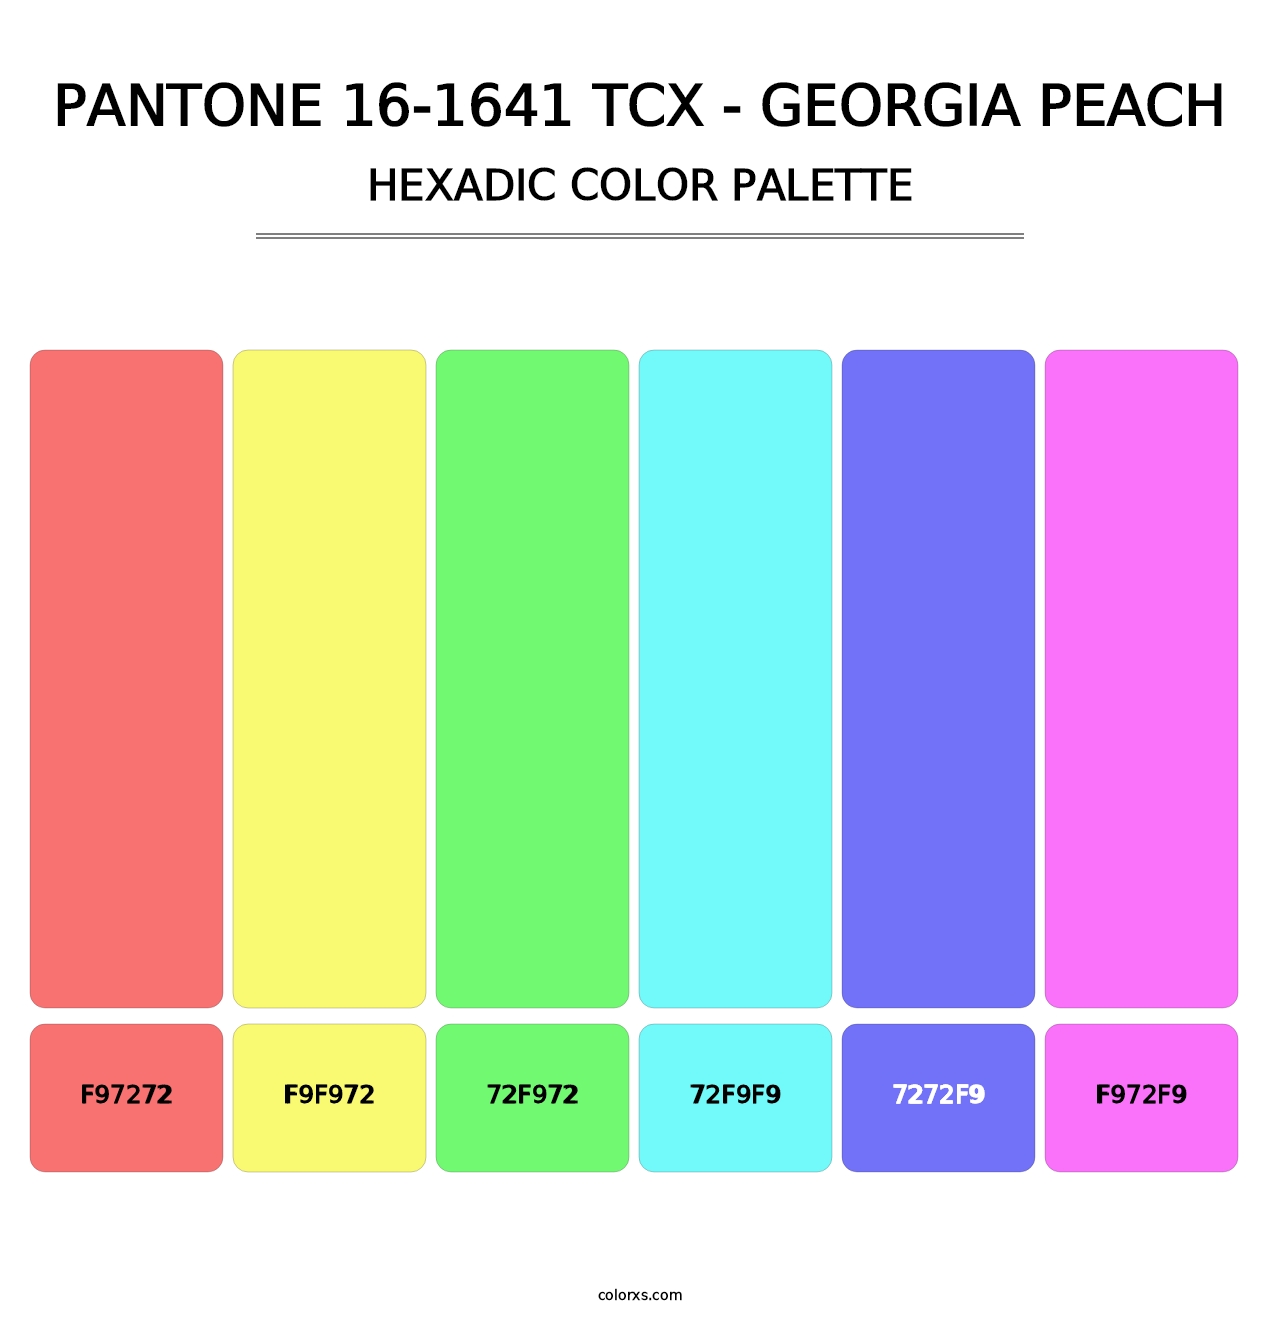 PANTONE 16-1641 TCX - Georgia Peach - Hexadic Color Palette